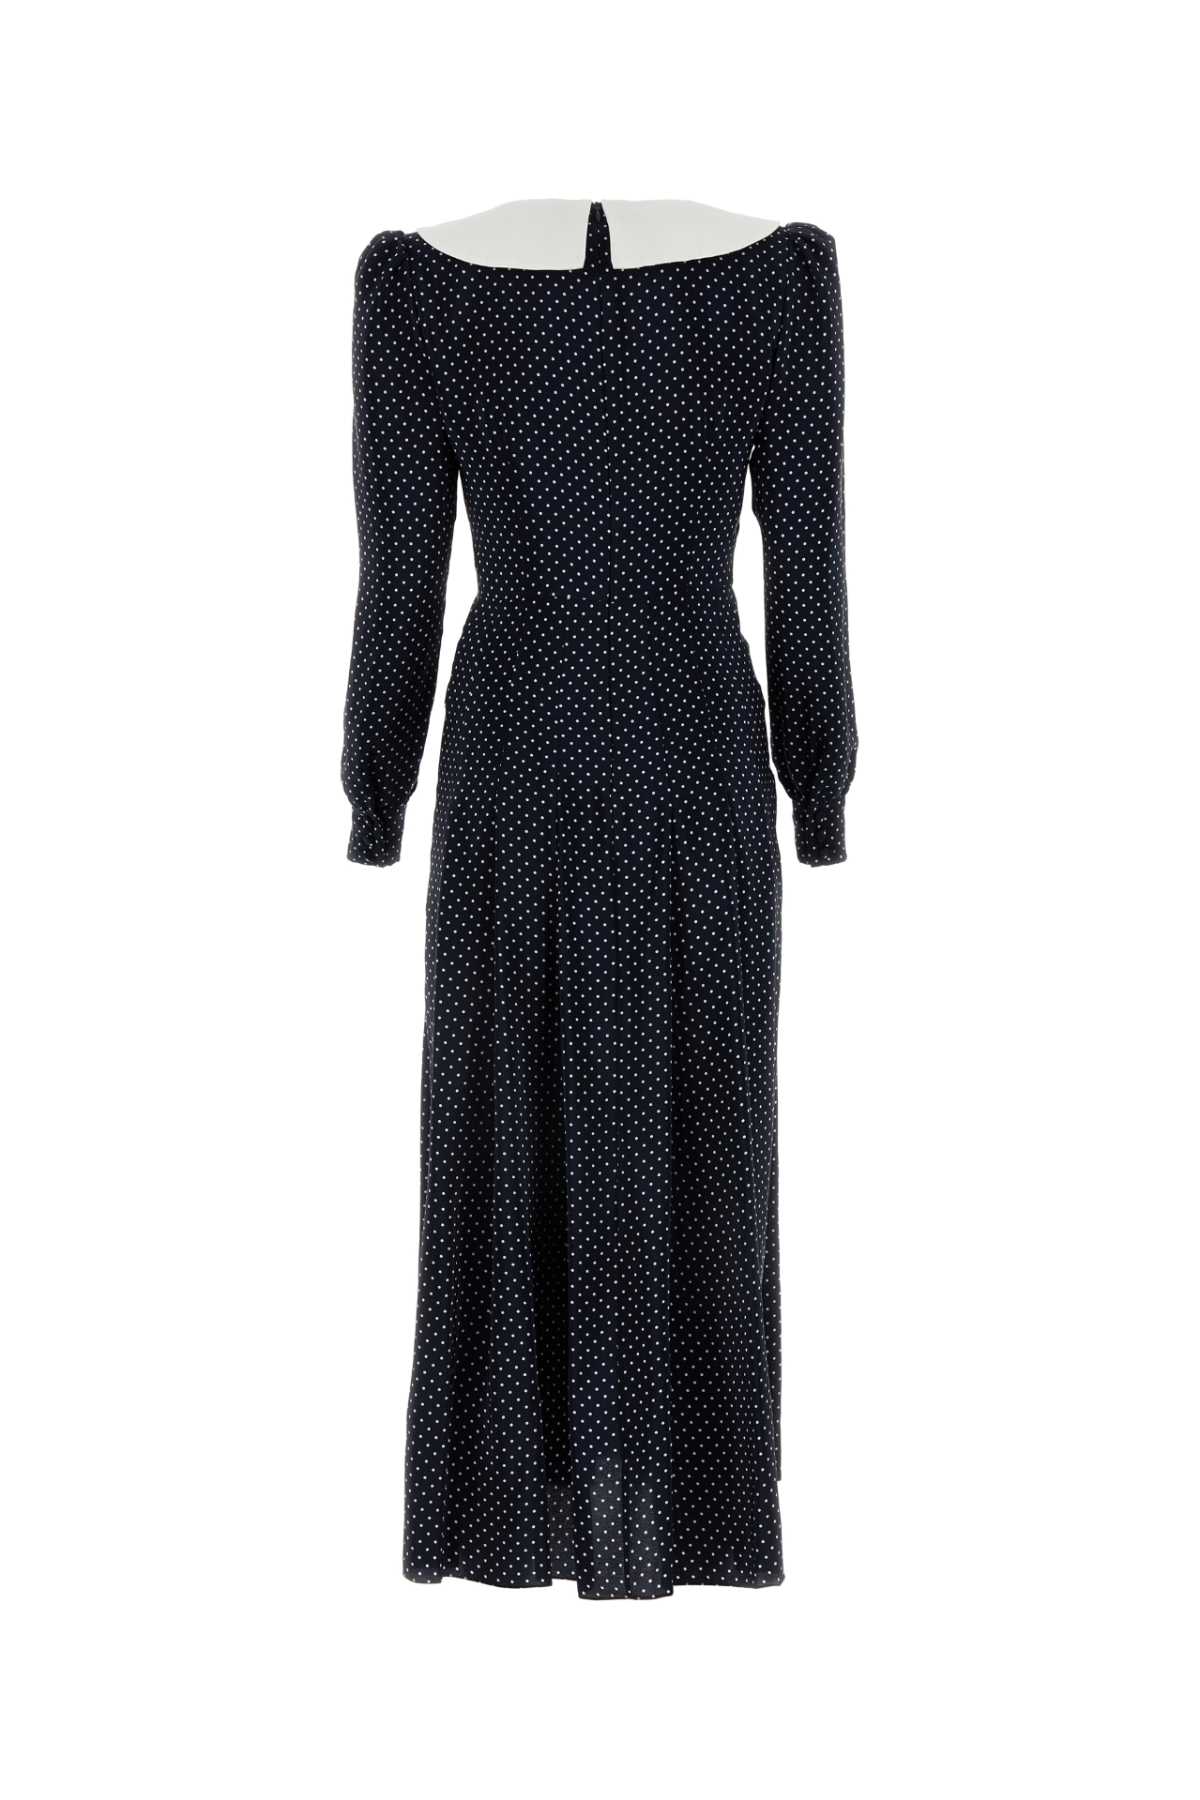 Alessandra Rich Printed Silk Dress In Navybluewhite